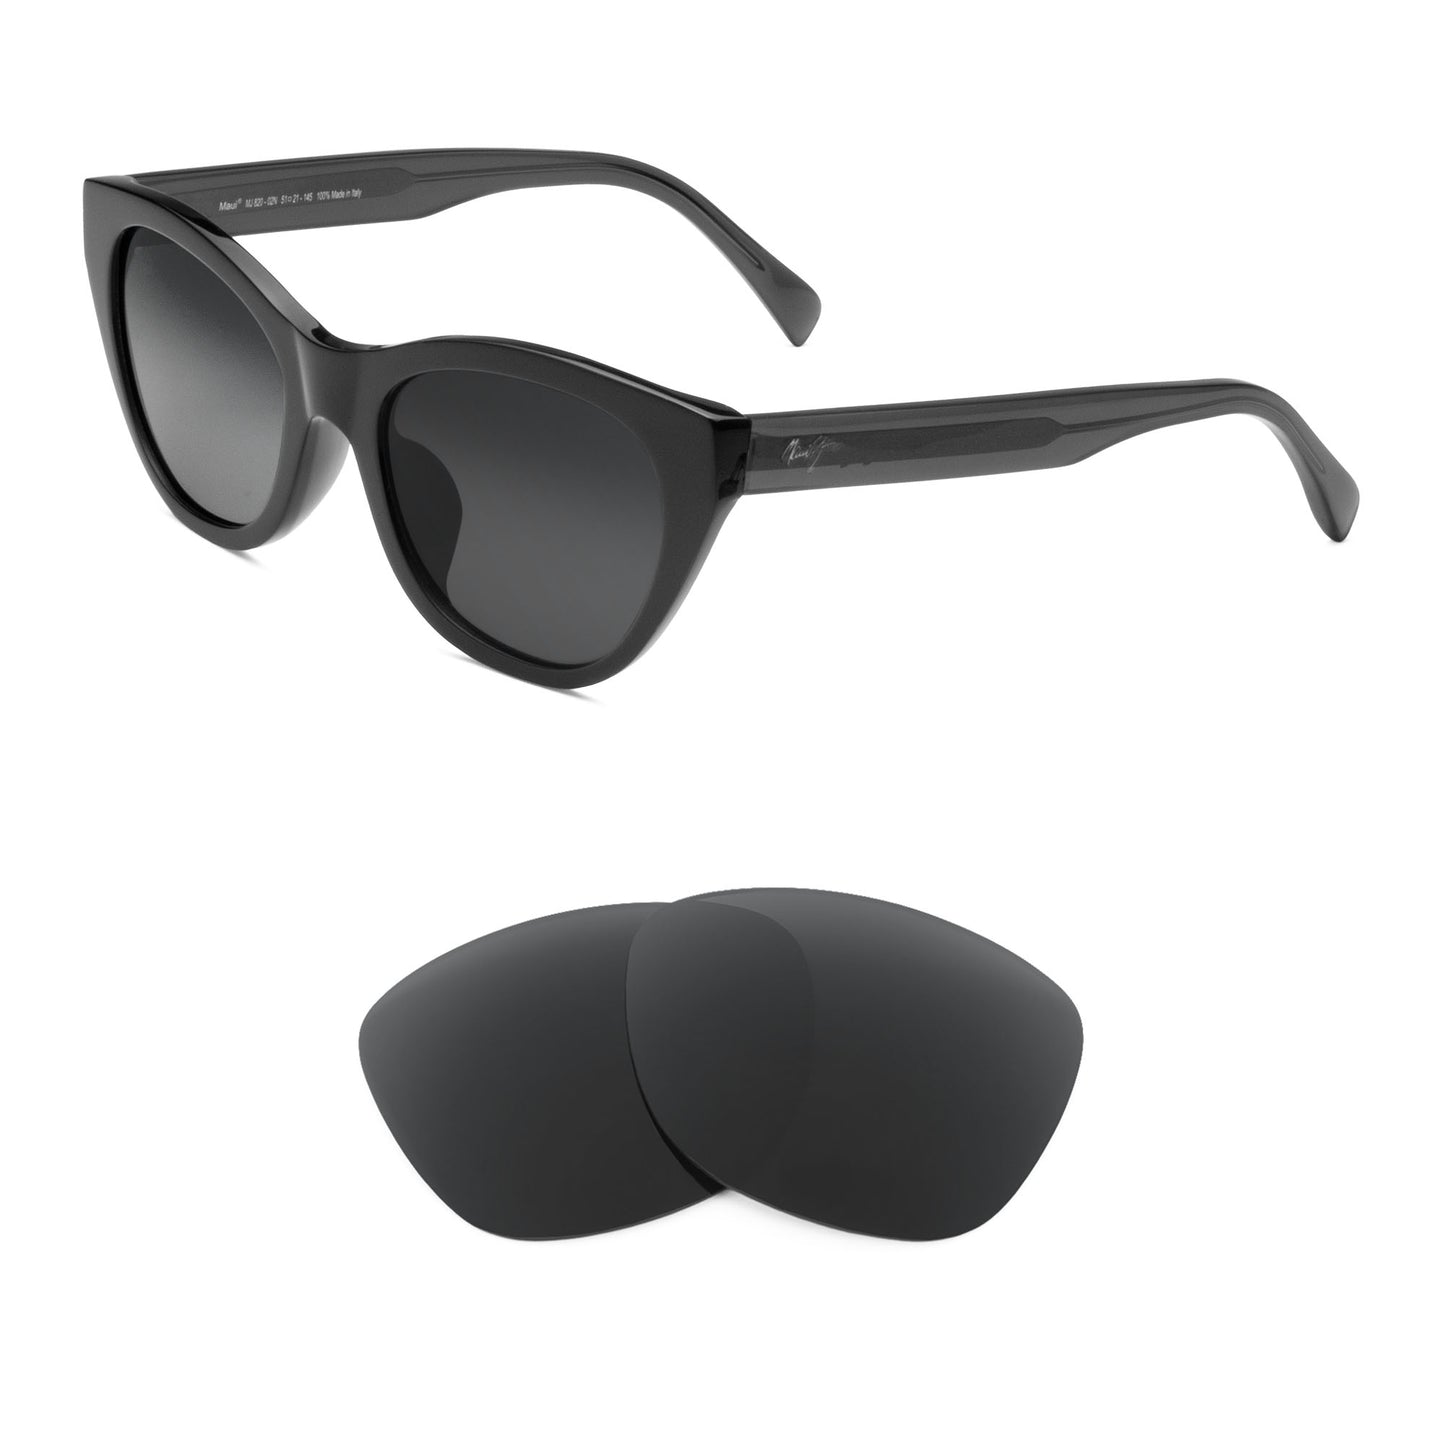 Maui Jim Capri MJ820 sunglasses with replacement lenses